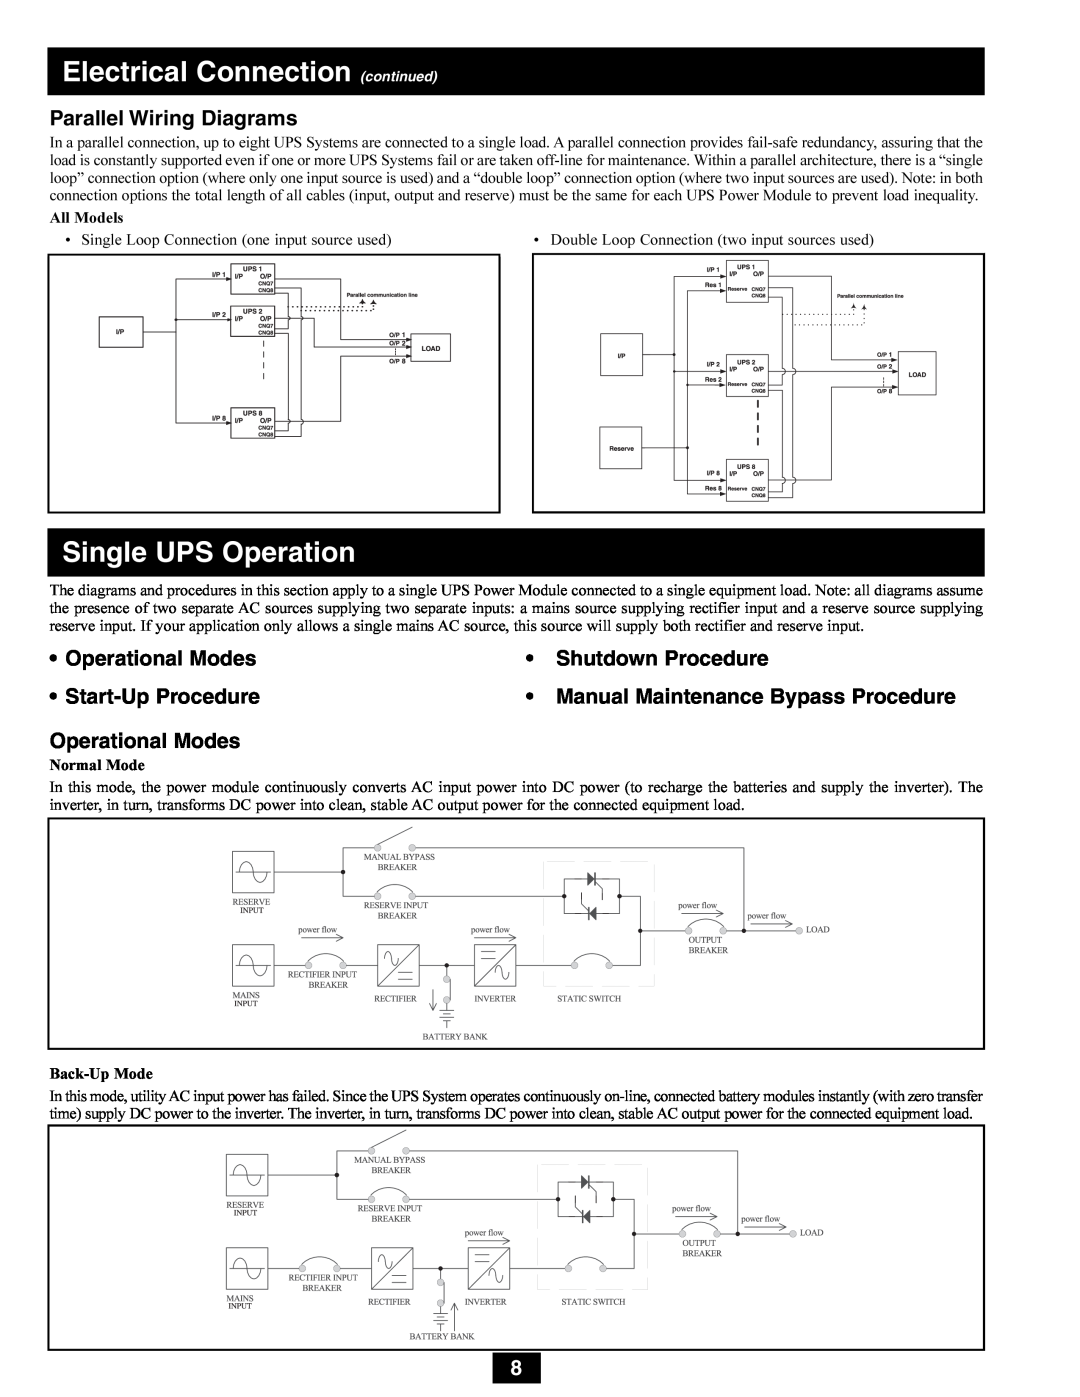 Tripp Lite SU80K3/3PM Parallel Wiring Diagrams, Operational Modes, Shutdown Procedure, Start-Up Procedure, Normal Mode 